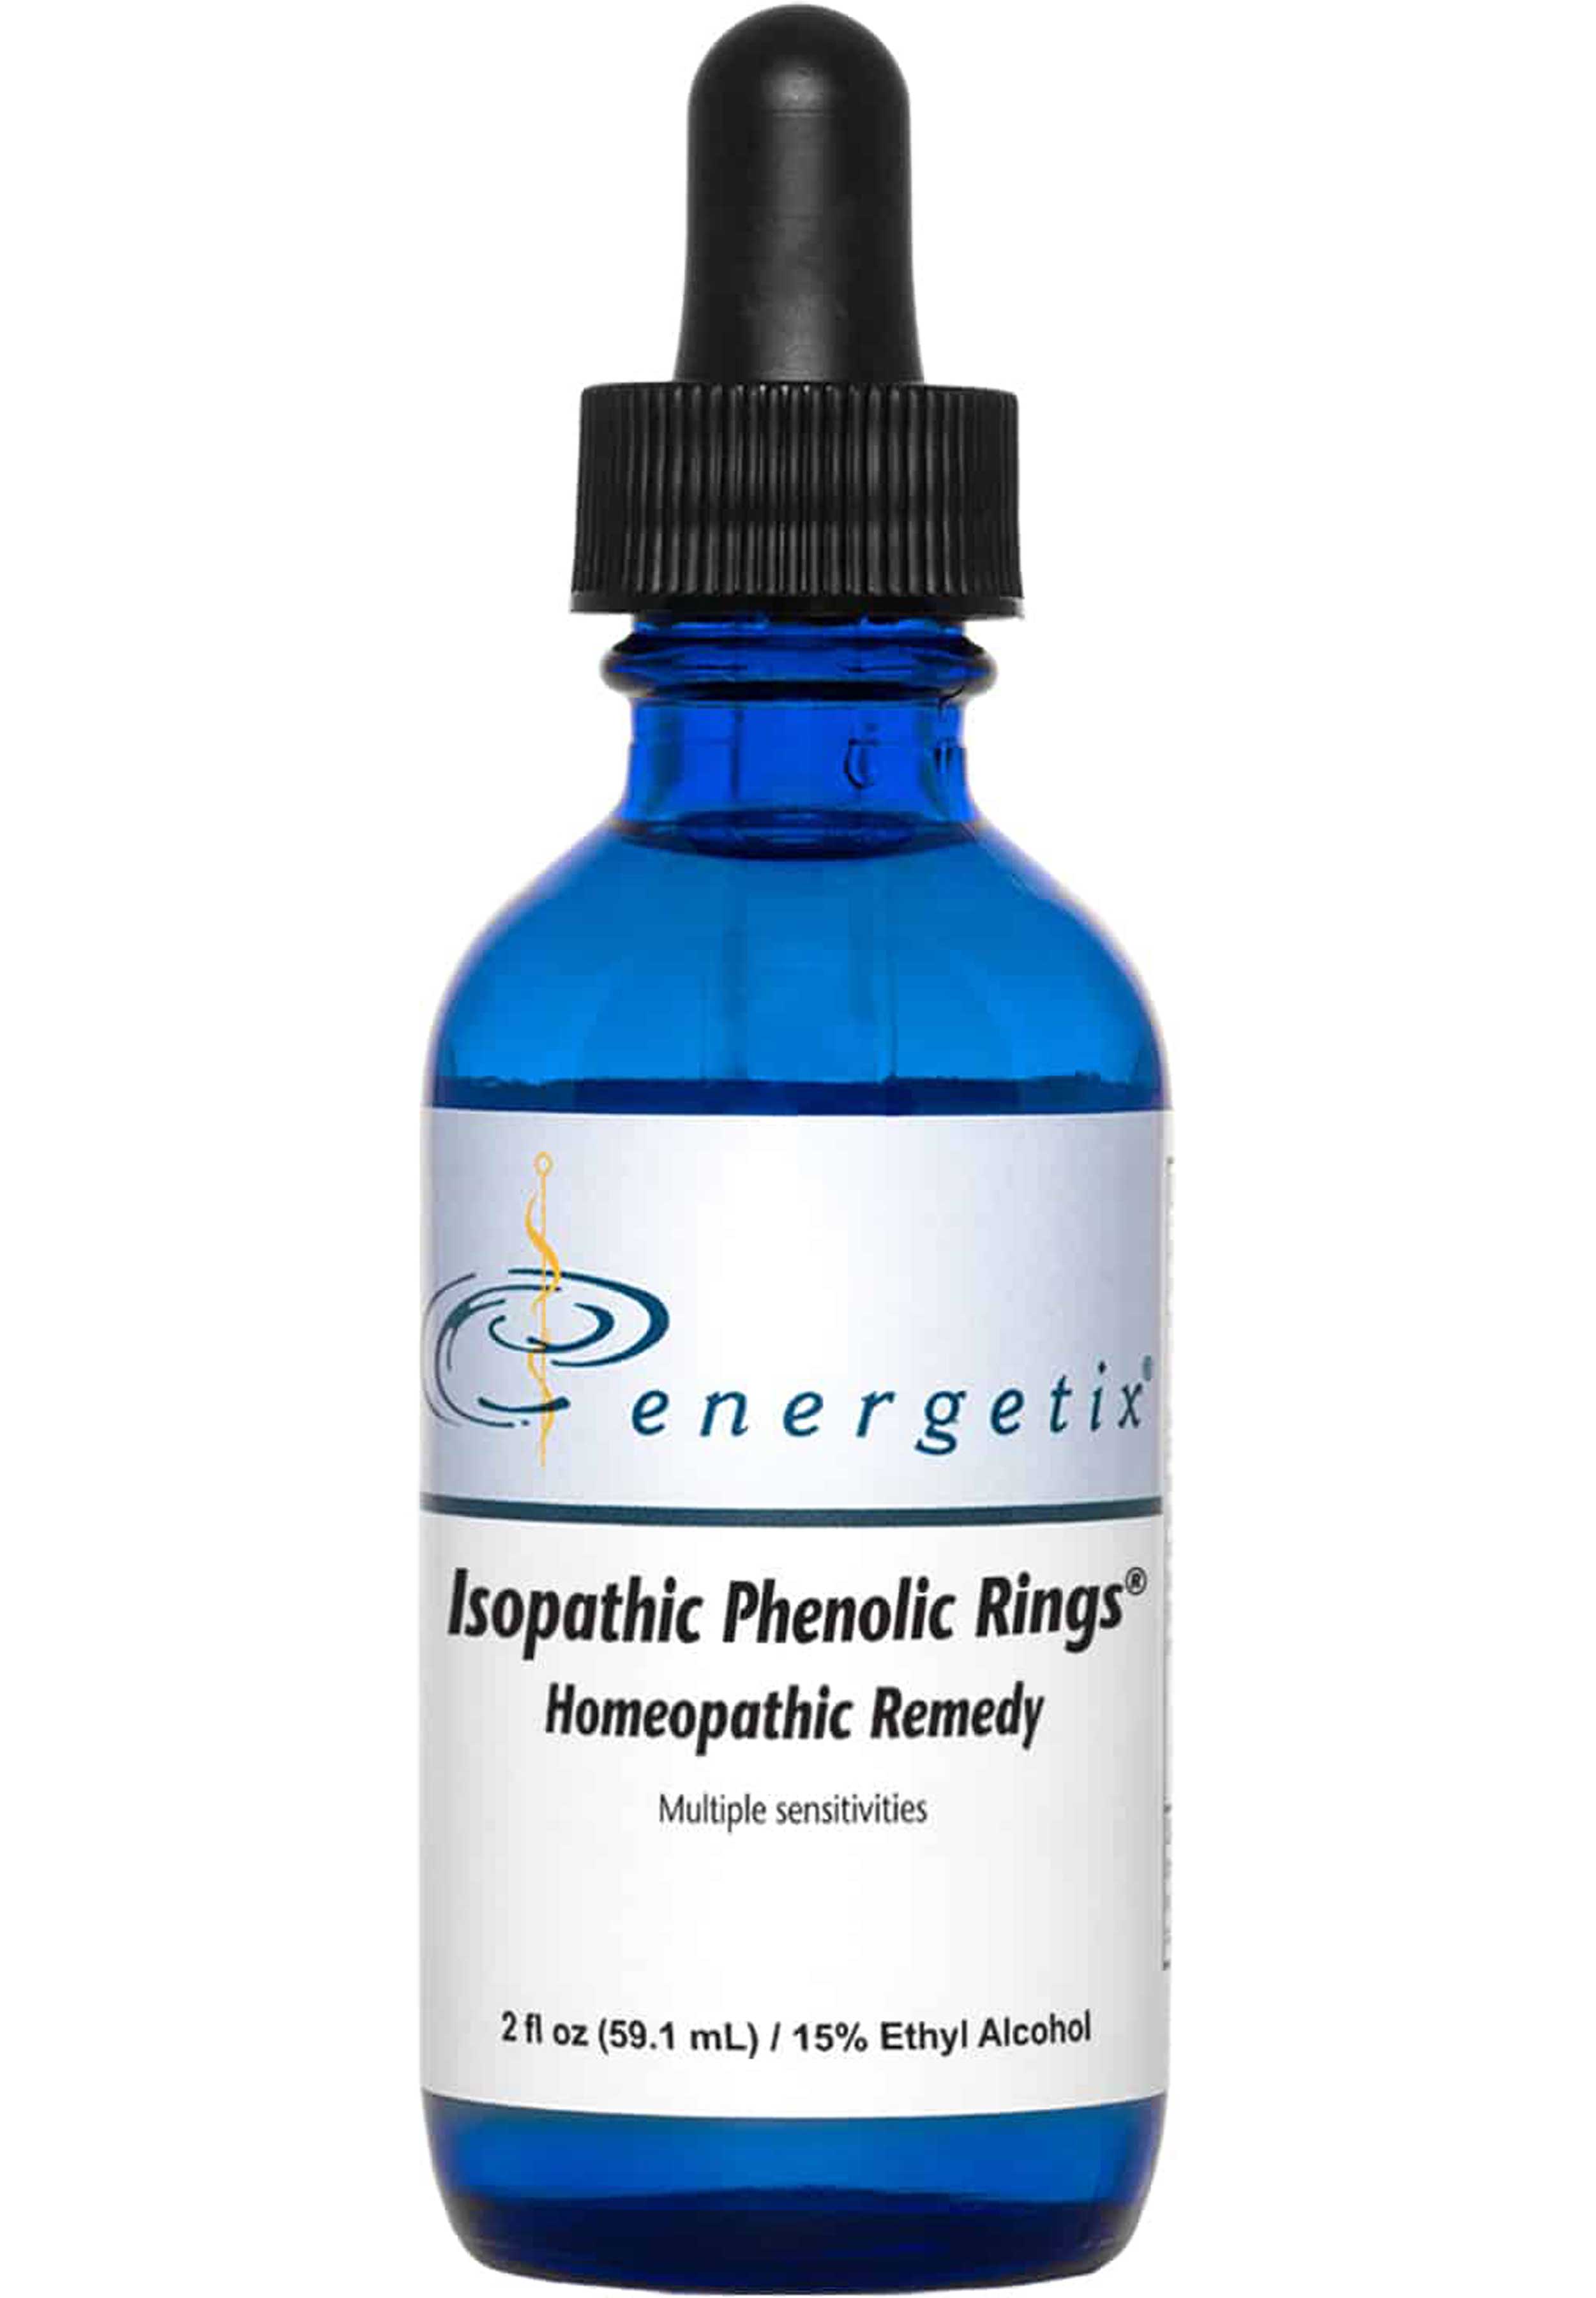 Energetix Isopathic Phenolic Rings